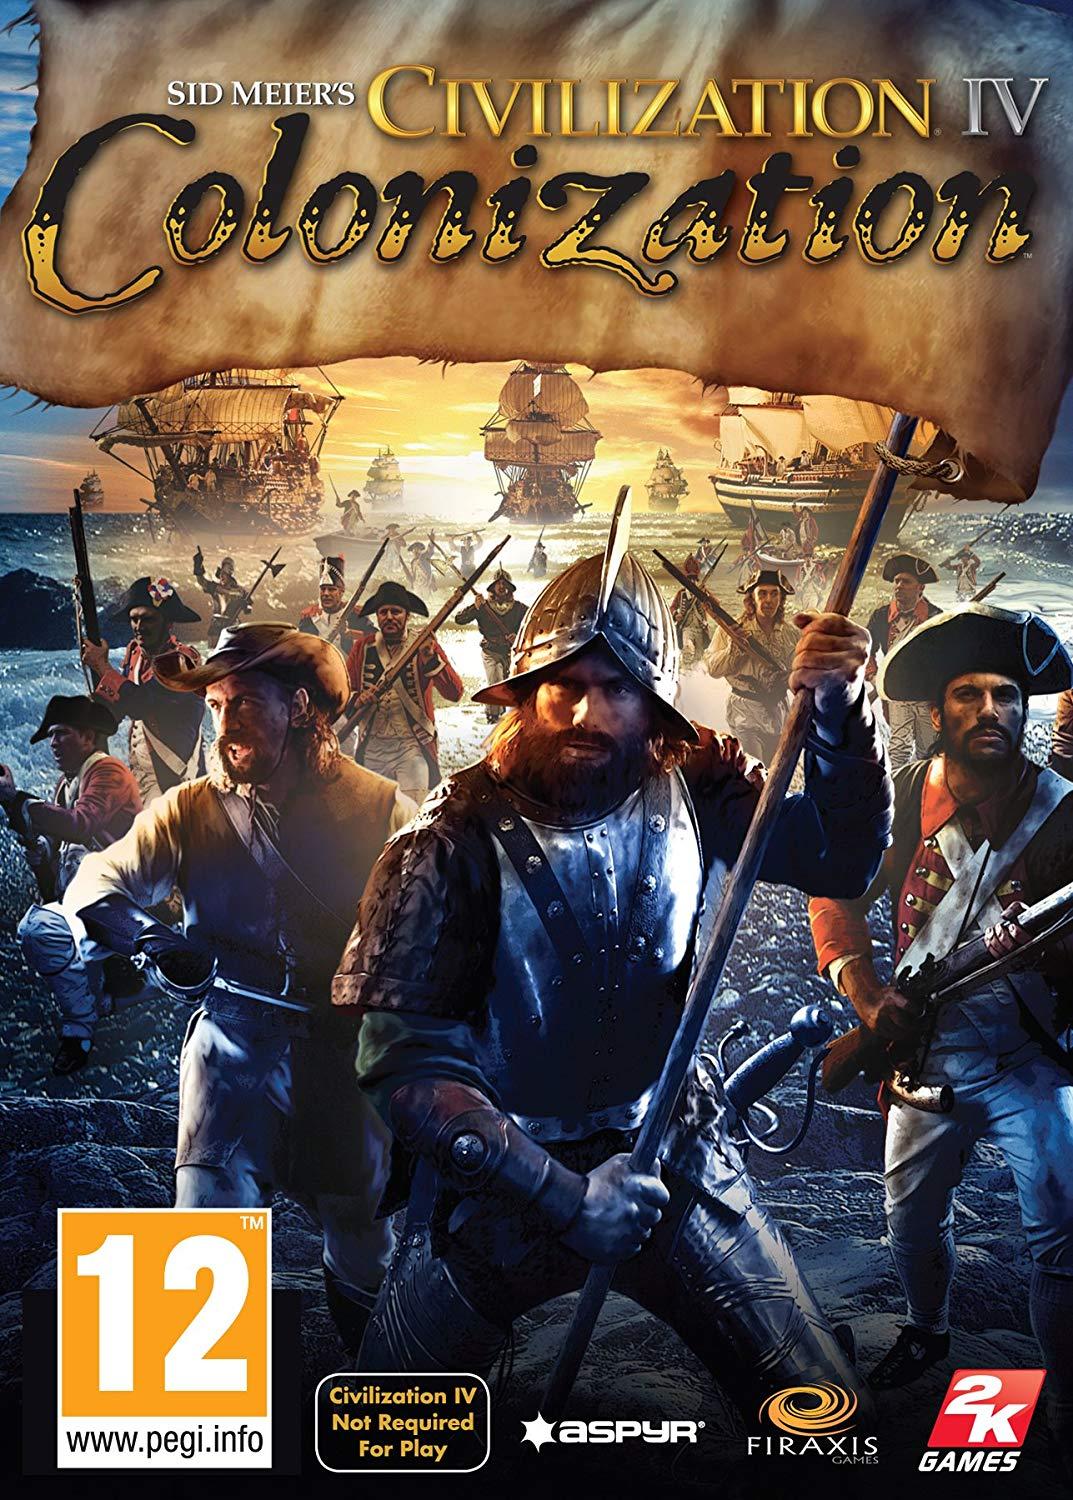 Sid Meier’s Civilization IV Colonialization Online Game Code